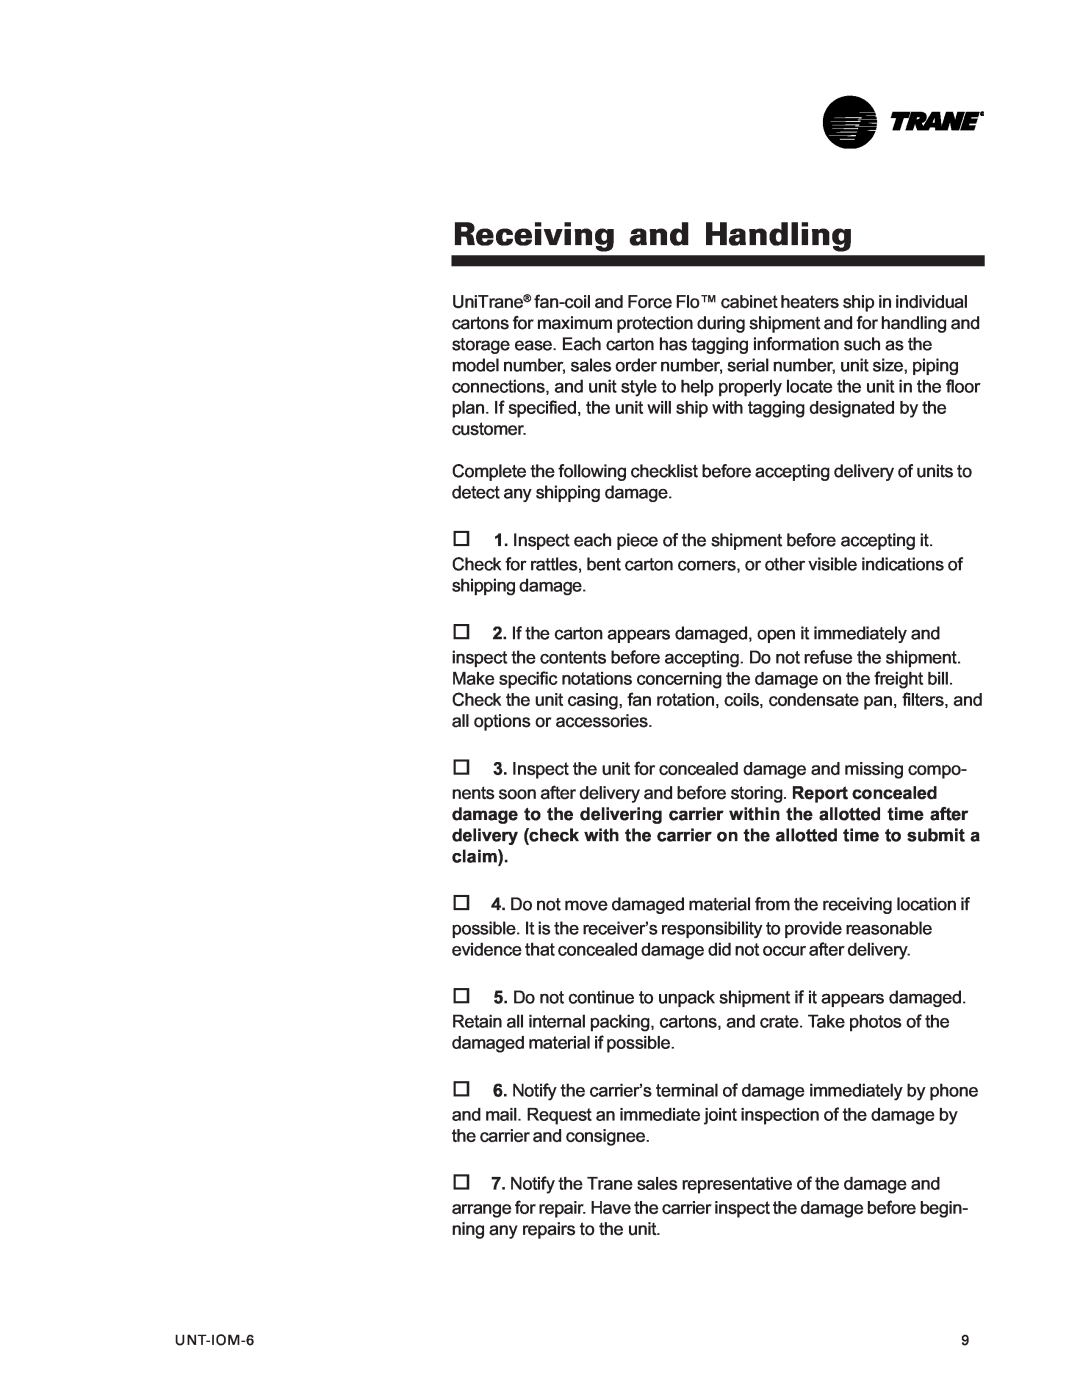 Trane LO manual Receiving and Handling, UNT-IOM-6 